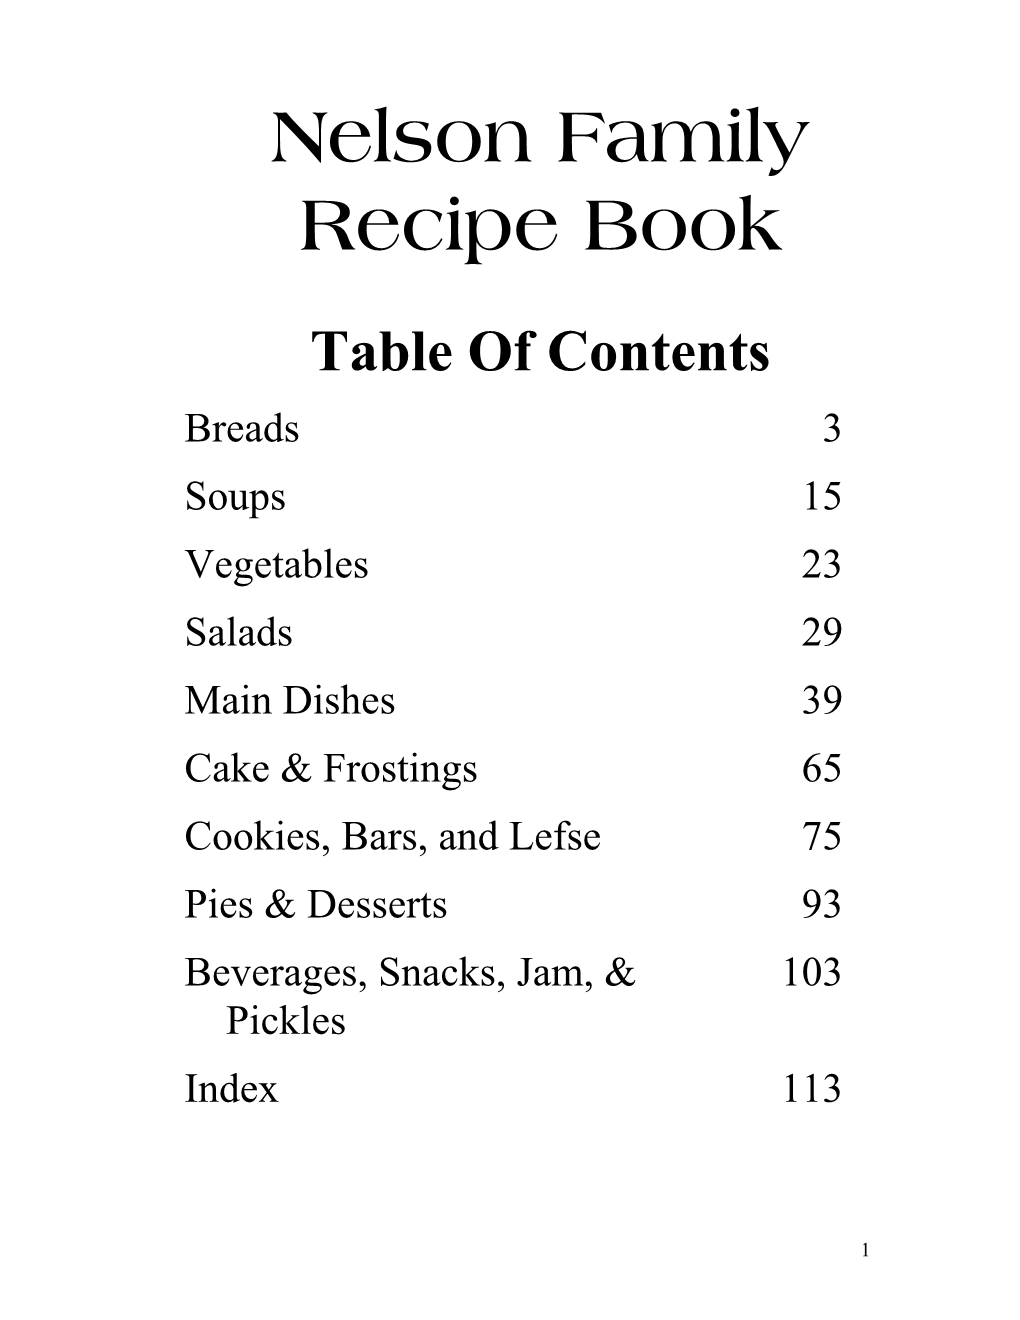 Nelson Family Recipe Book.Pdf Download